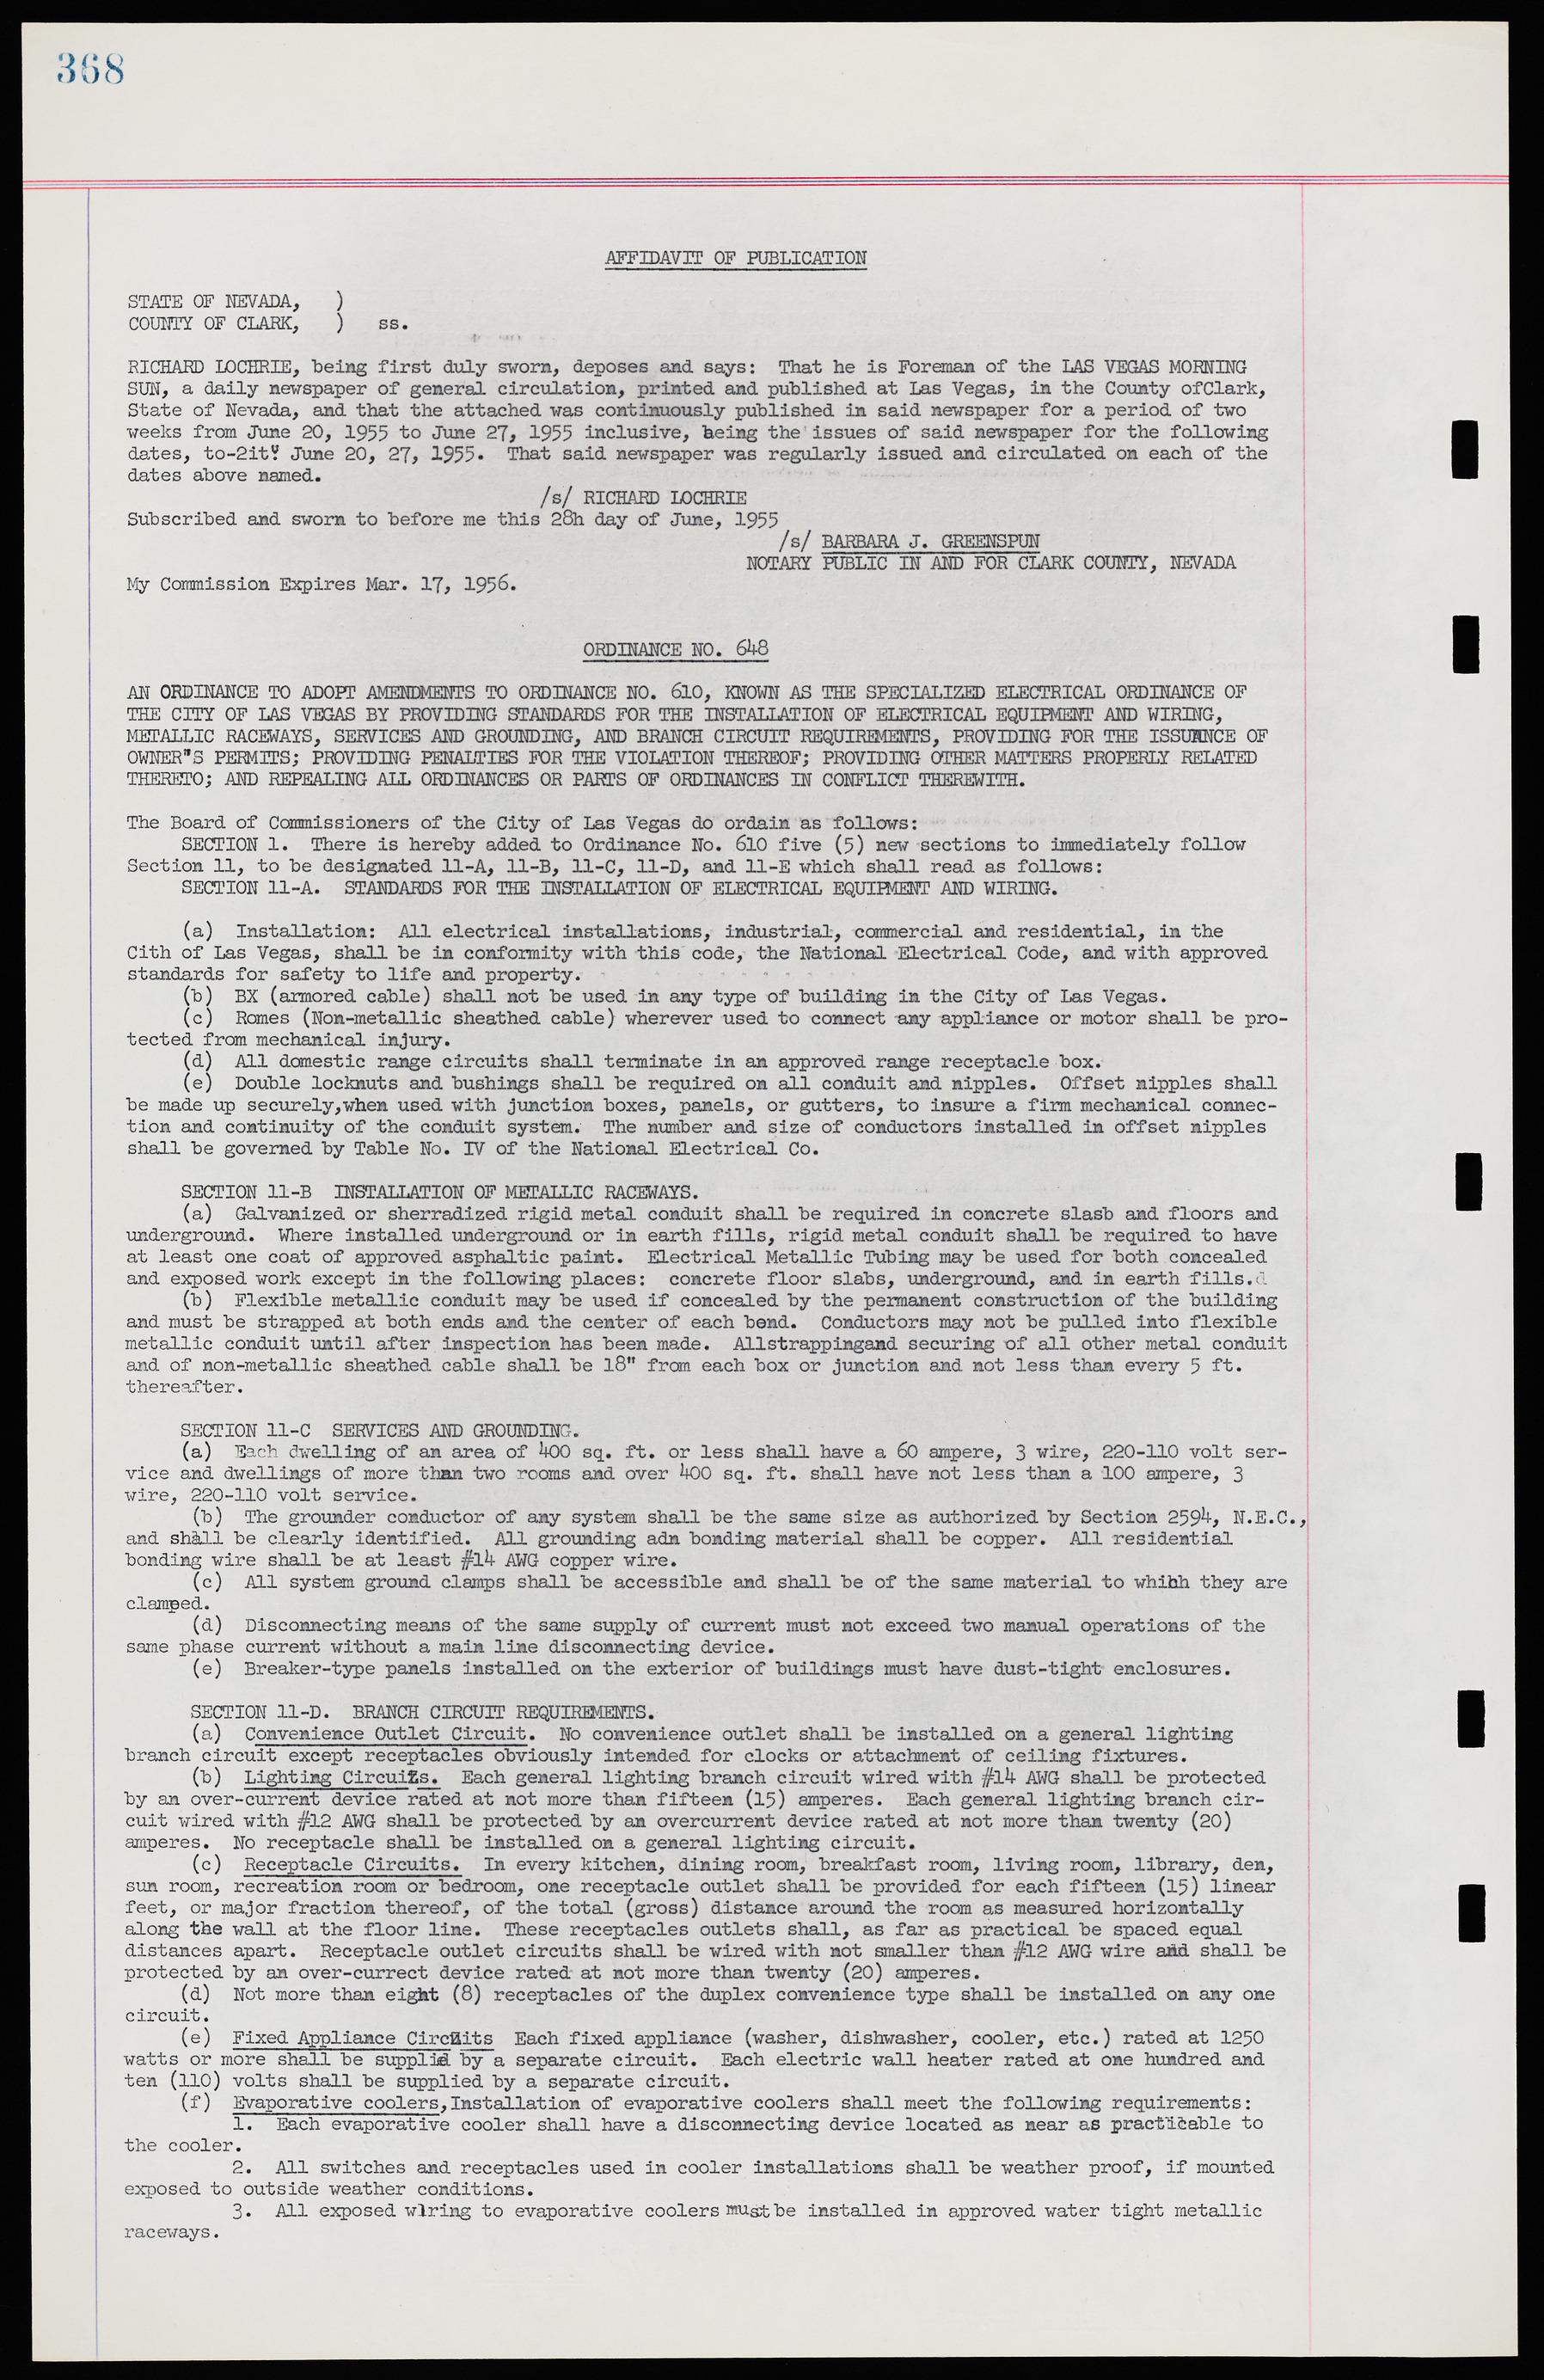 Las Vegas City Ordinances, November 13, 1950 to August 6, 1958, lvc000015-376